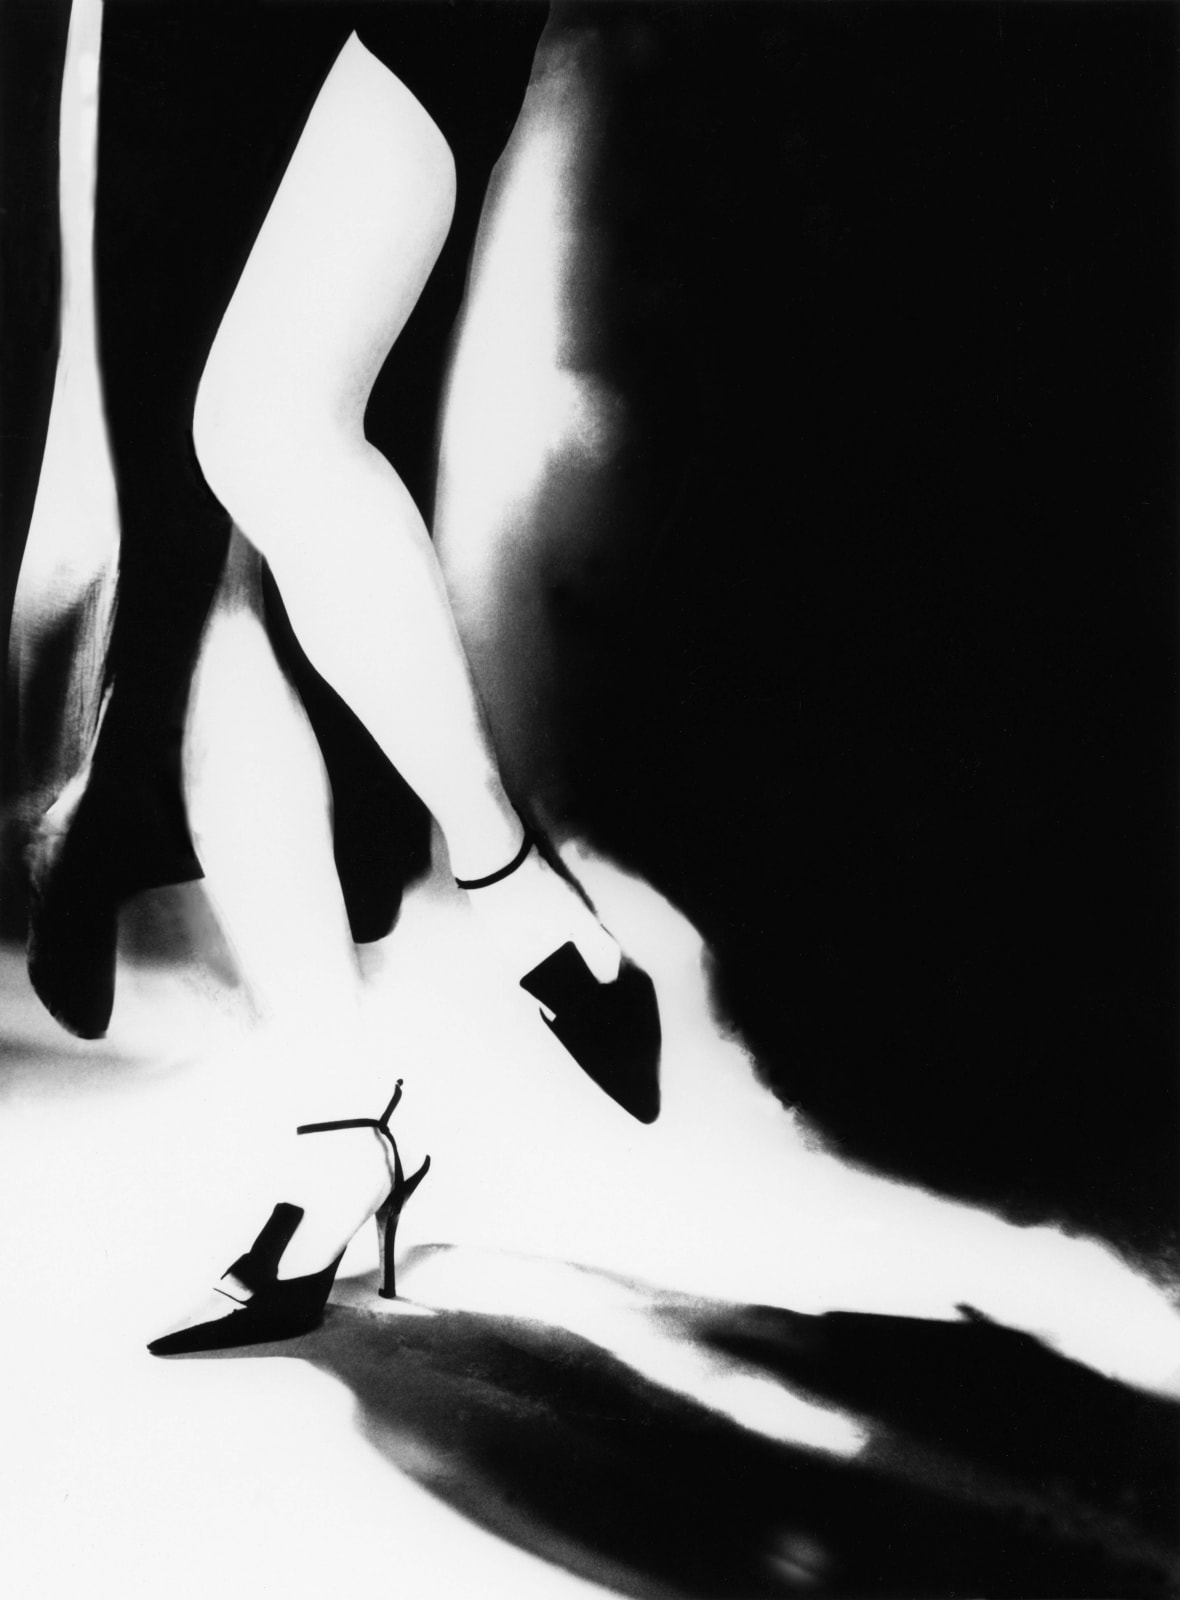 Lillian Bassman photograph of woman's legs in black heels, with slit in dress